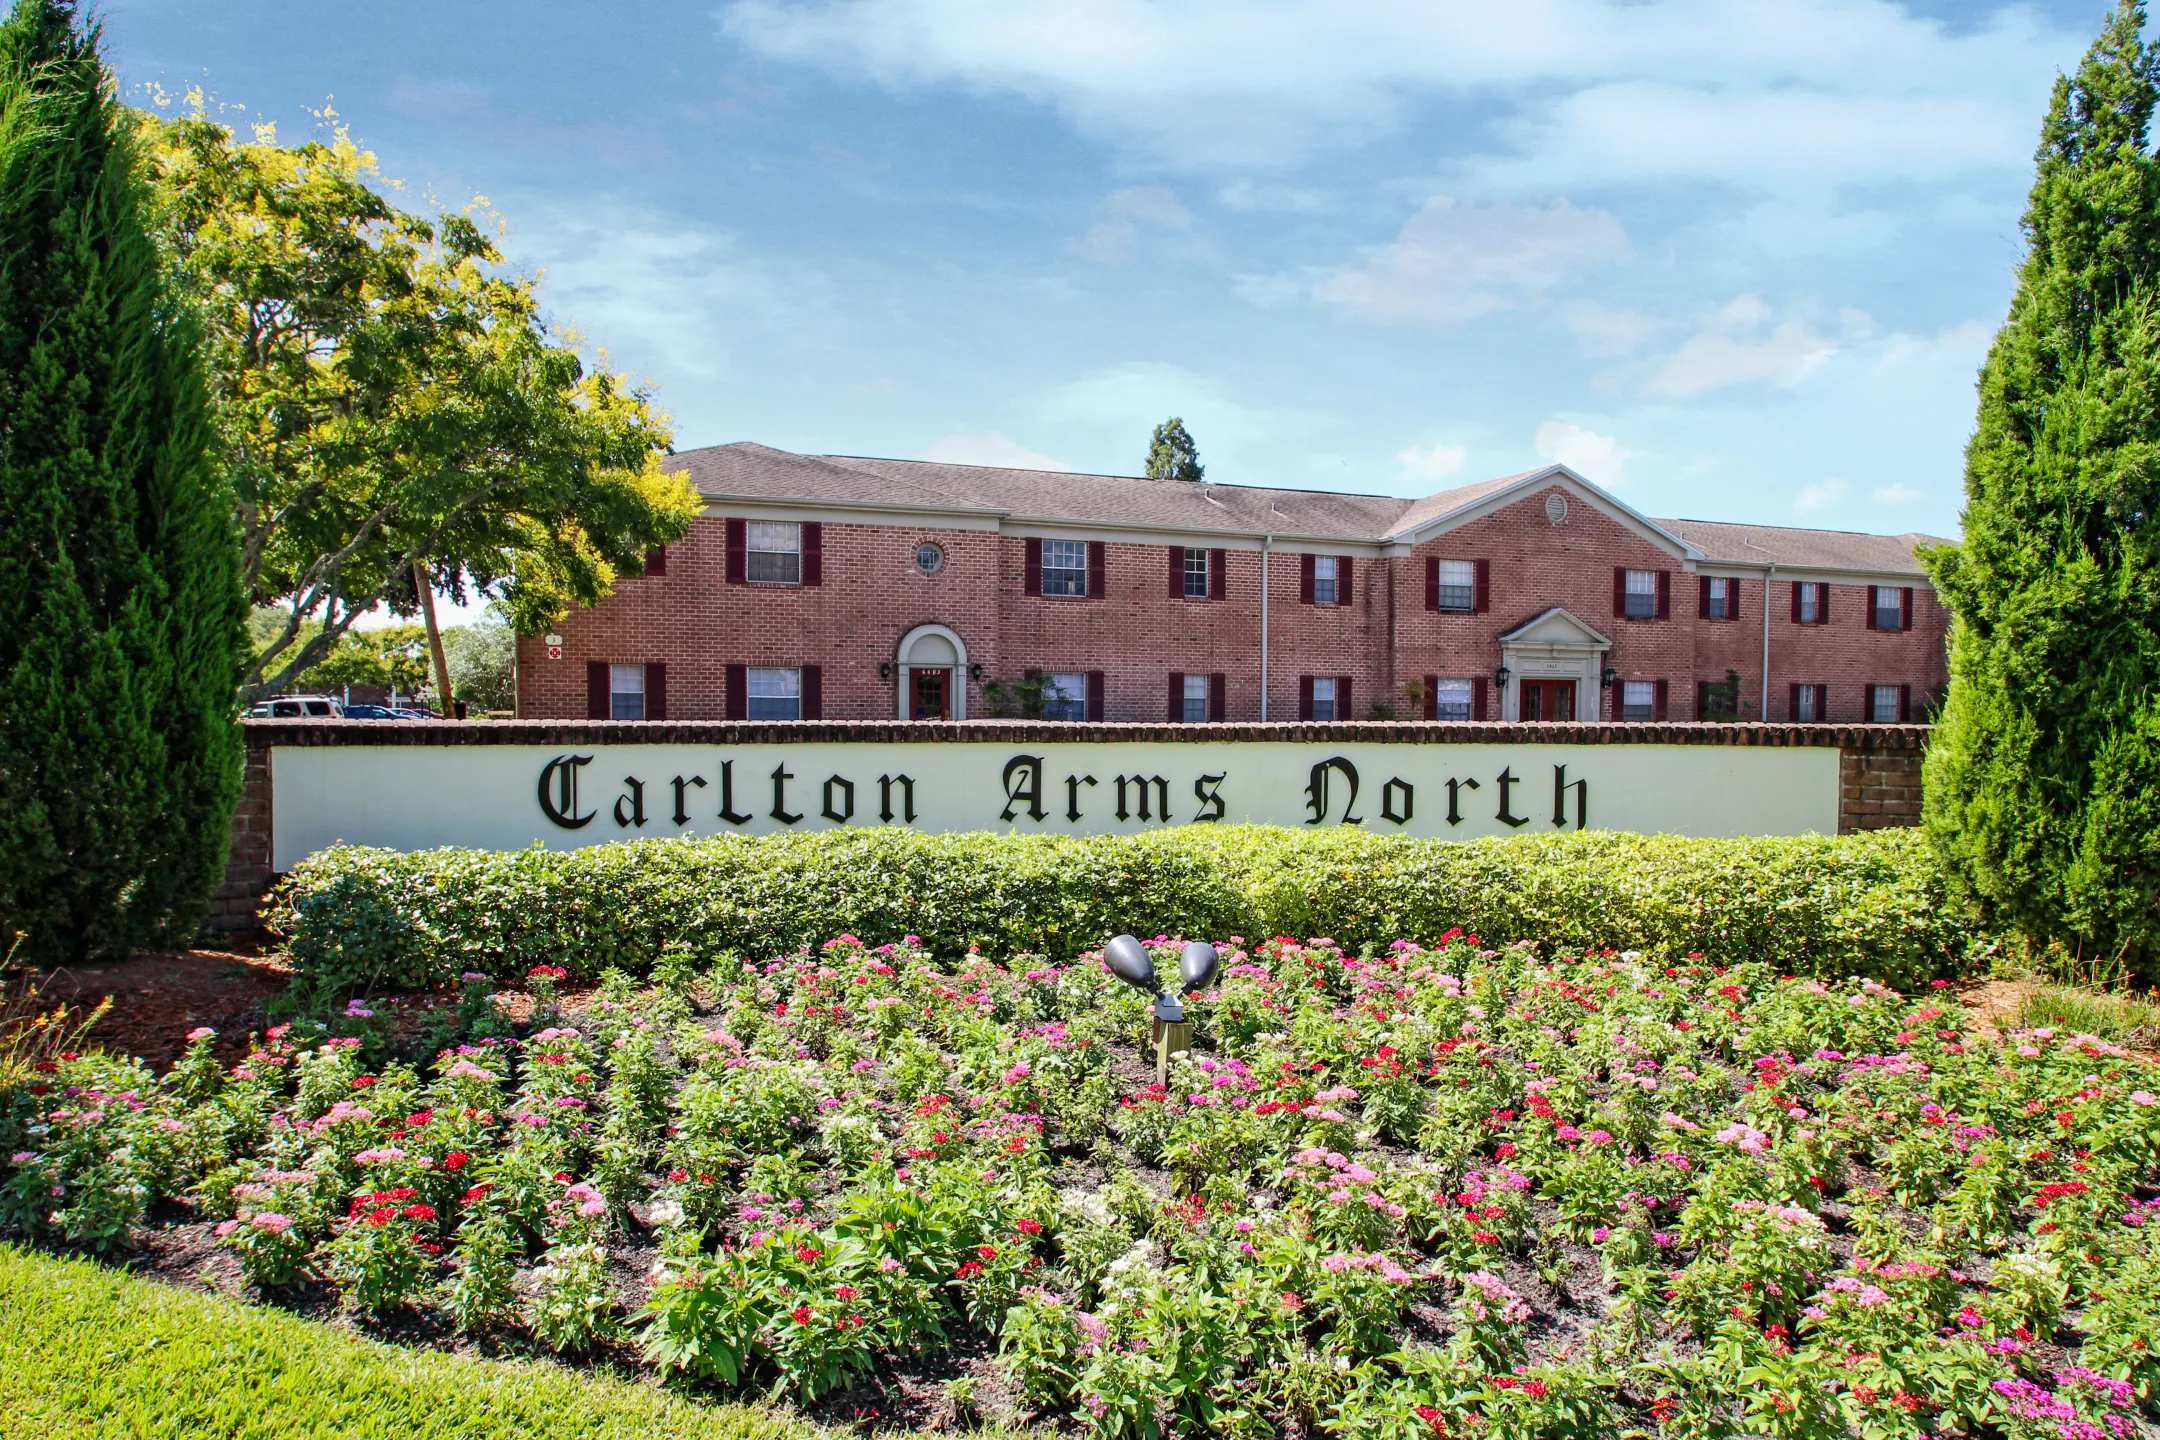 Carlton Arms North - Tampa, FL